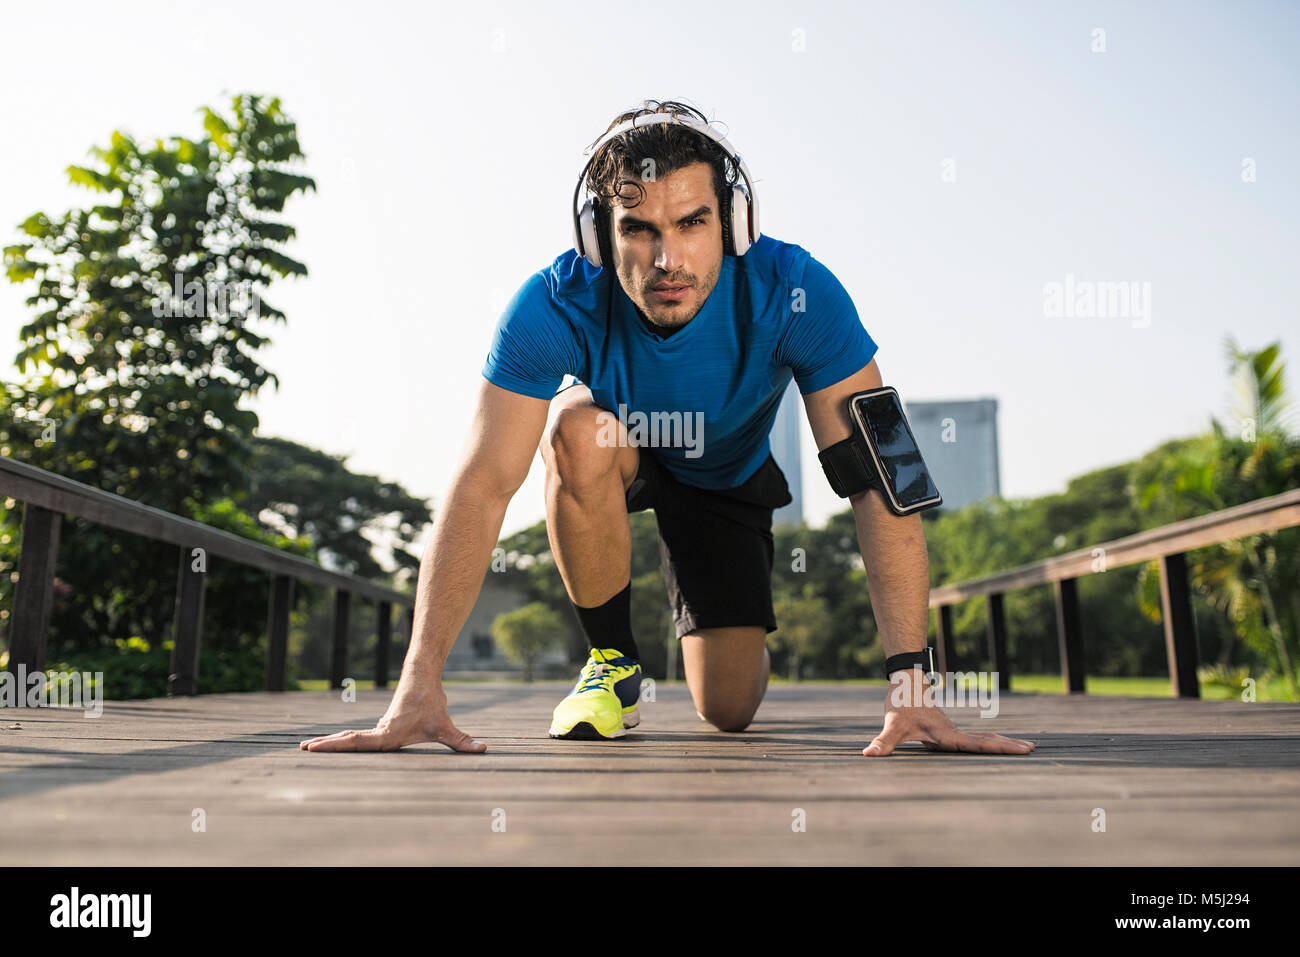 Runner training start position on street in urban park, wearing headphones Stock Photo